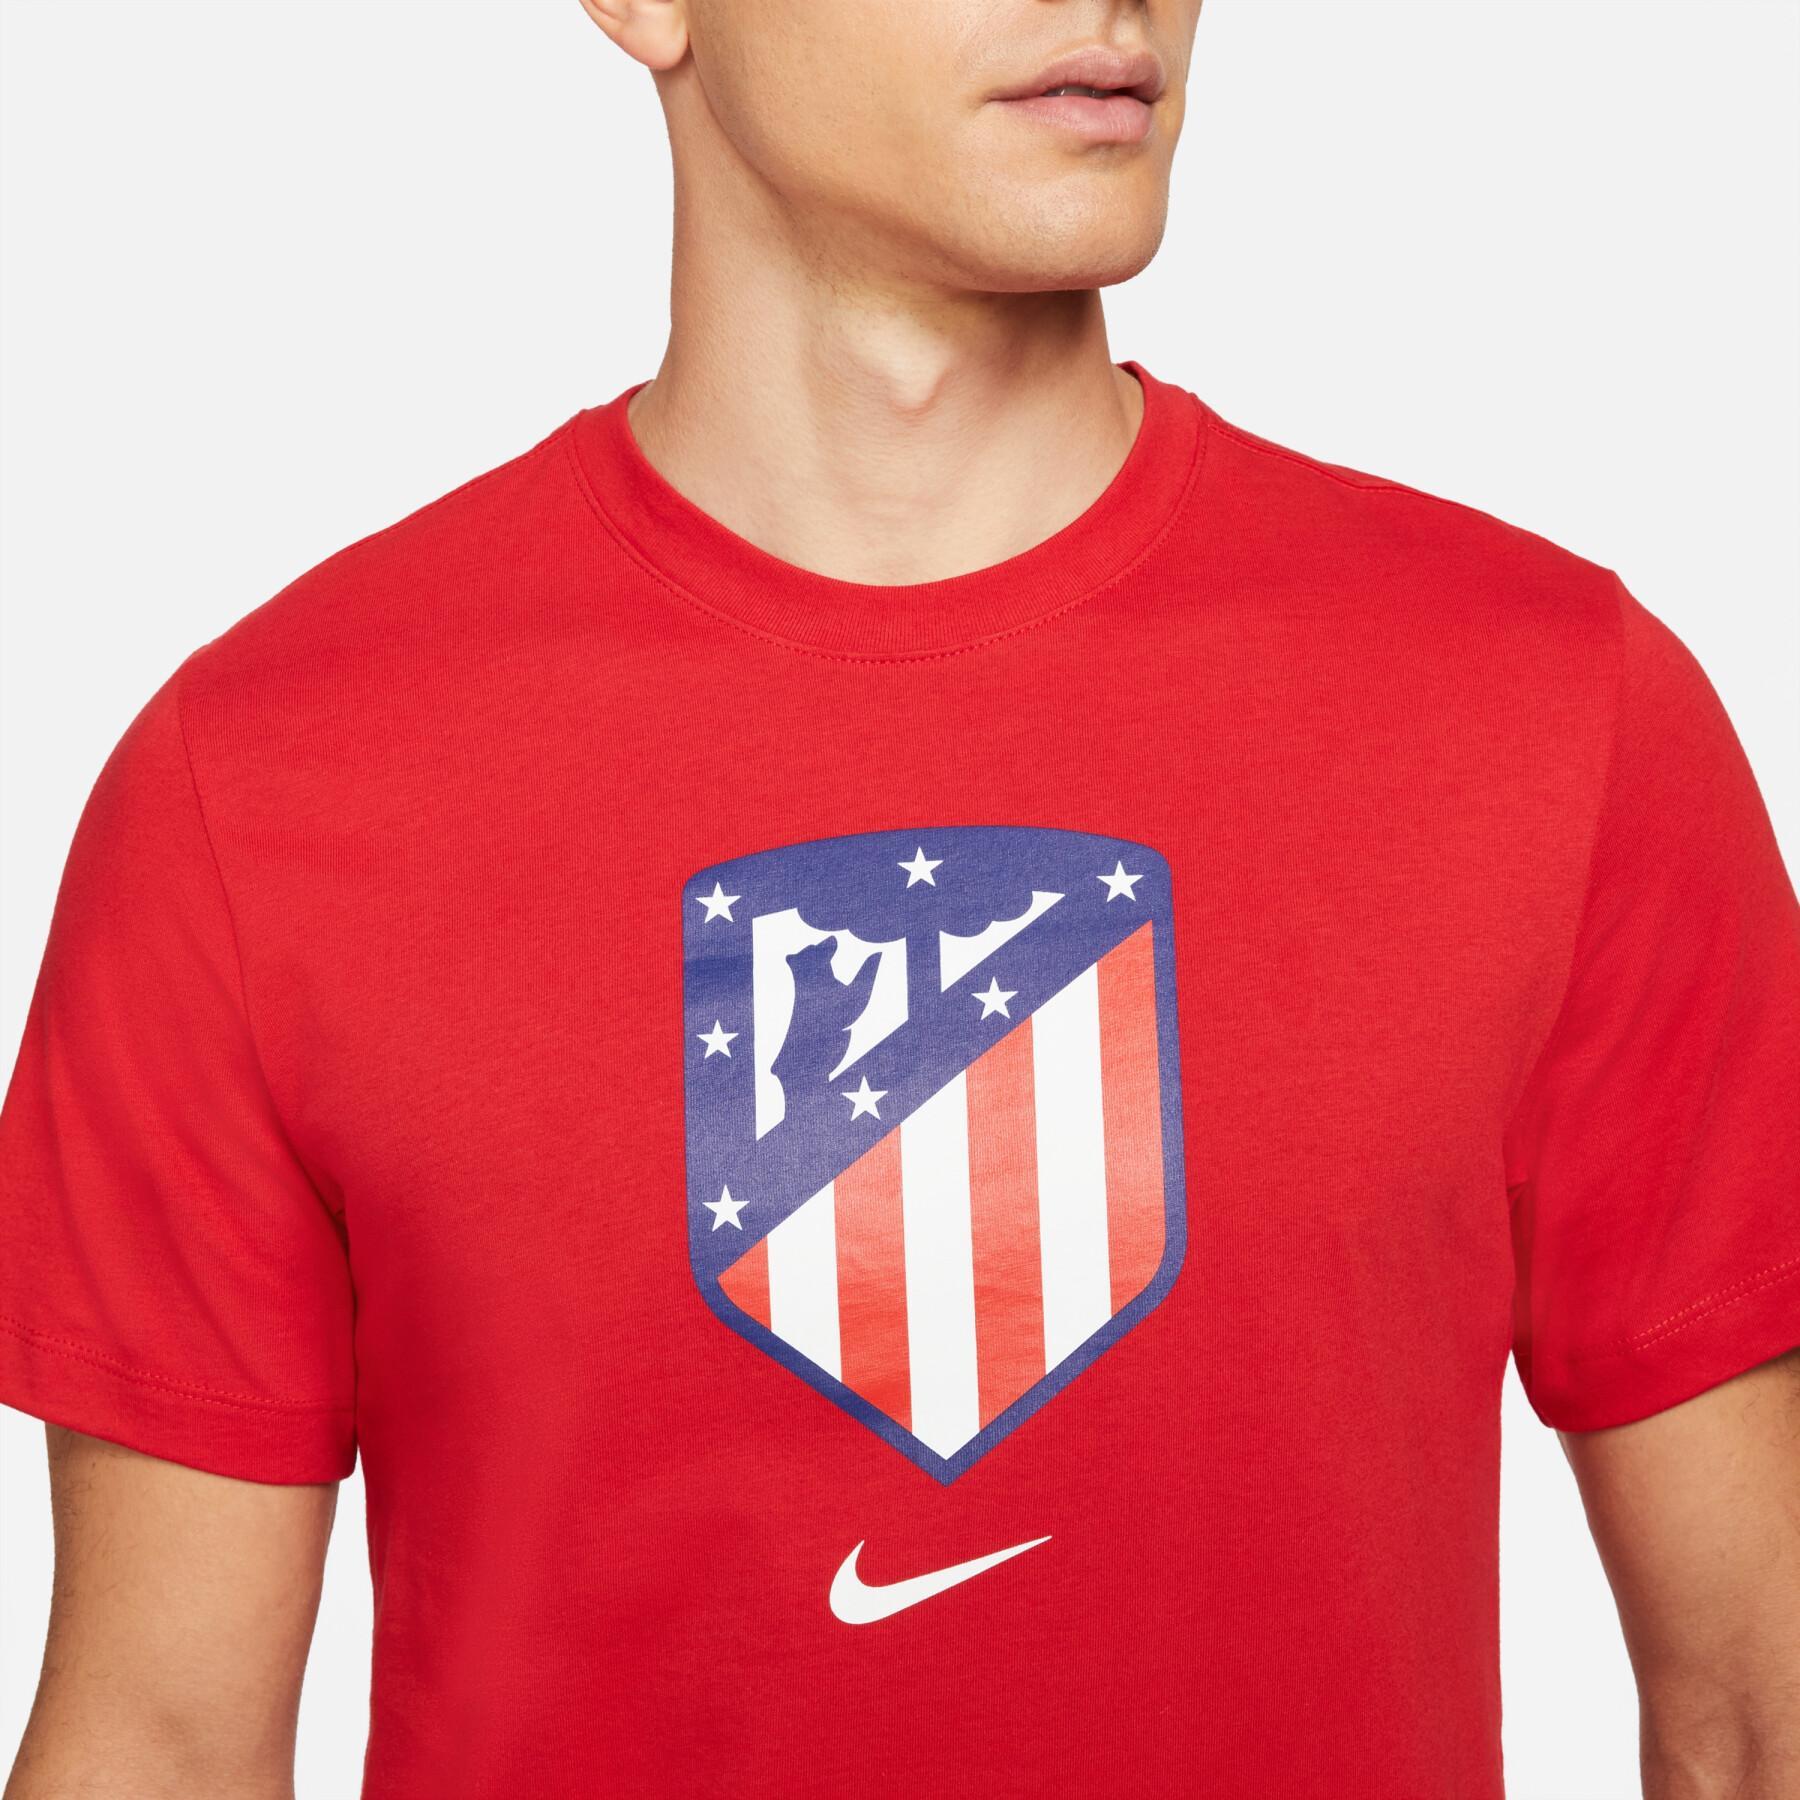 atlético de madrid evergreen crest t-shirt 2021/22